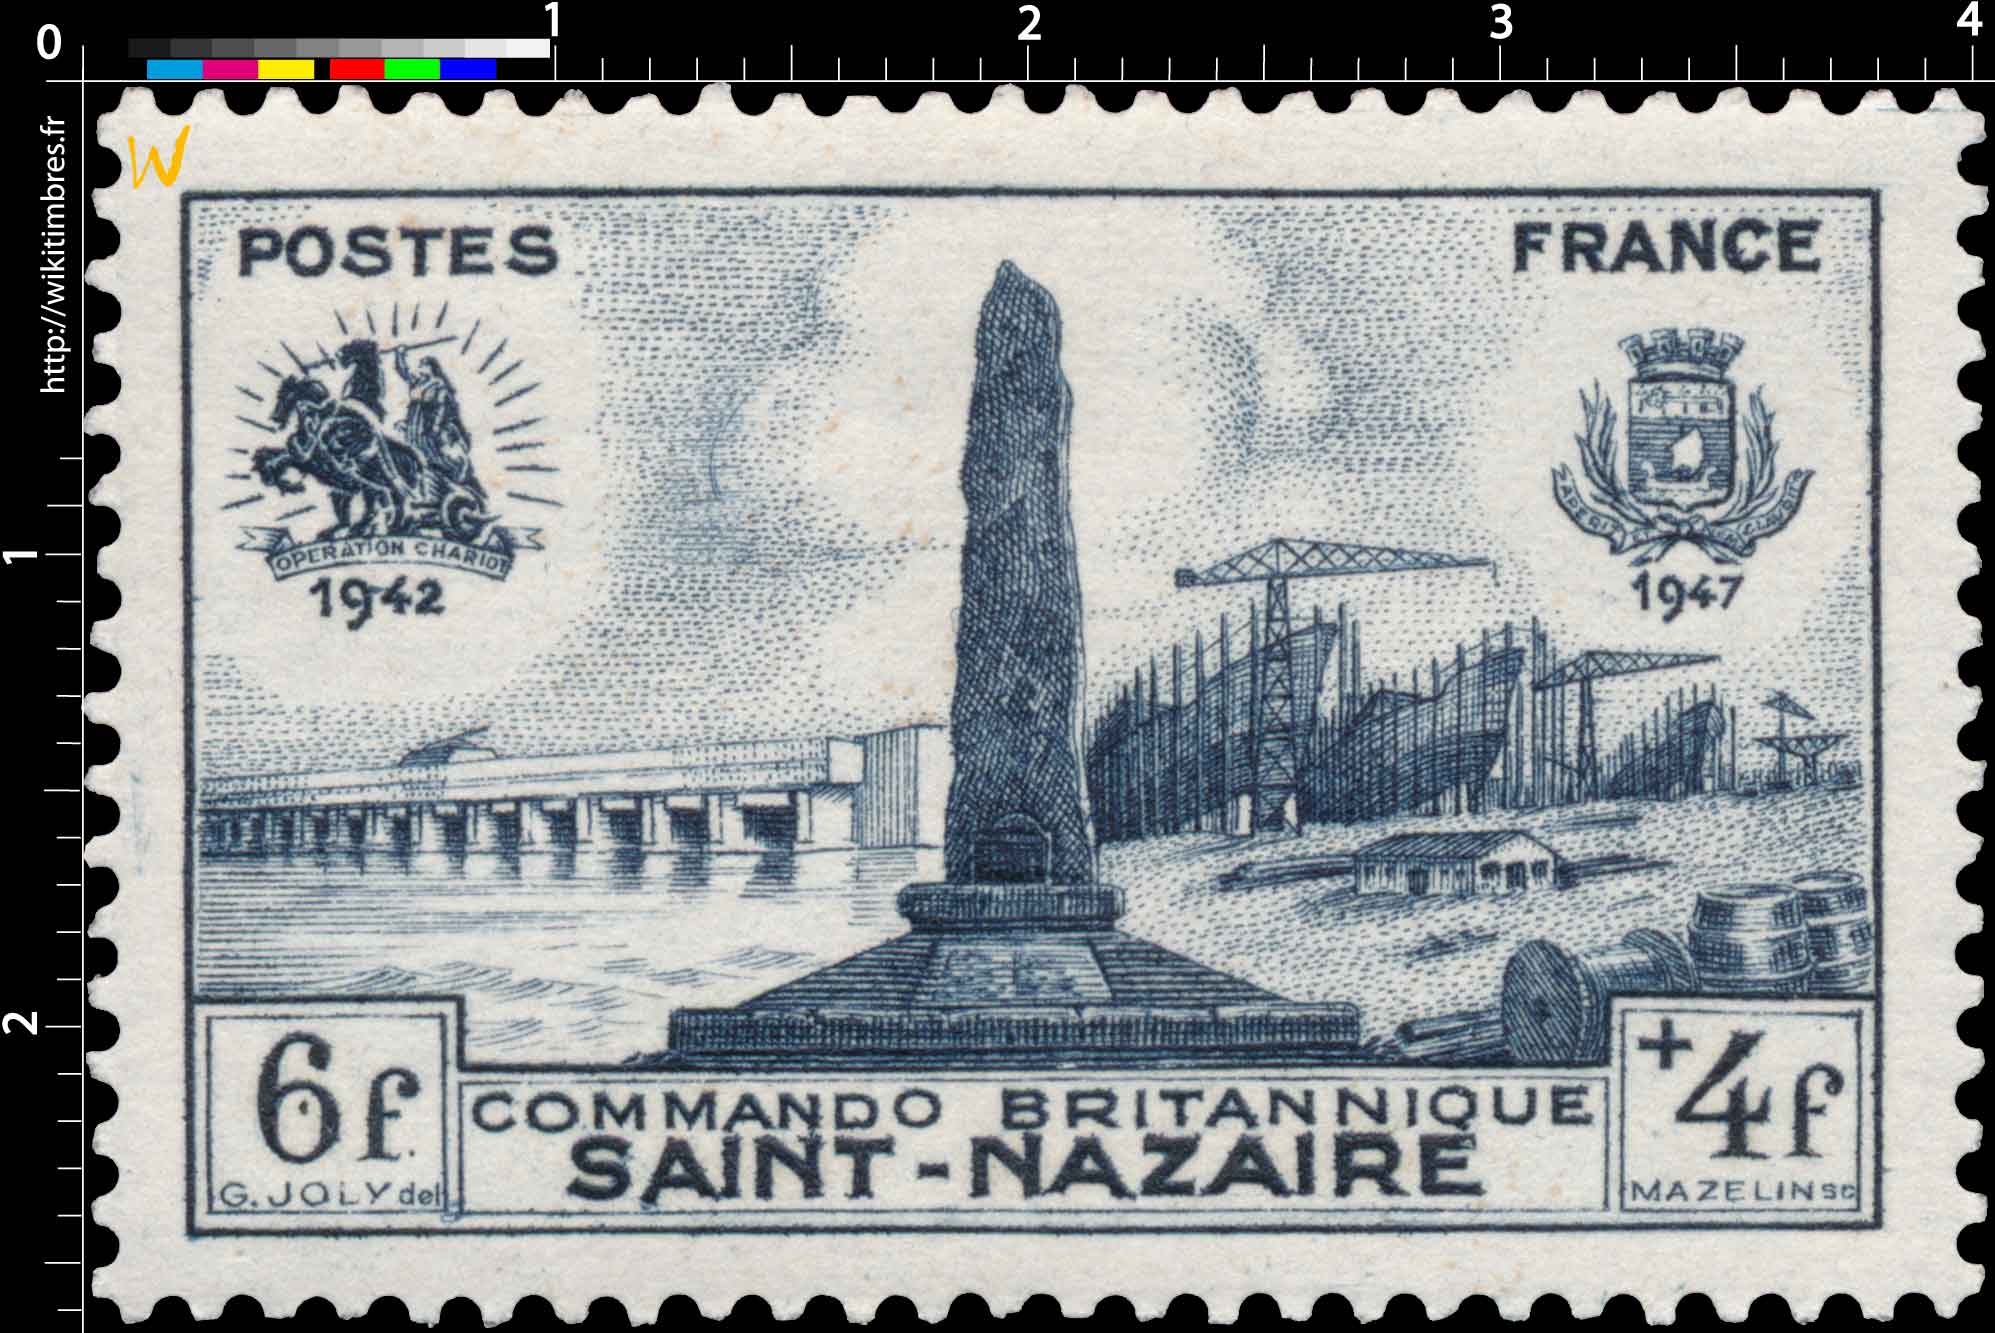 COMMANDO BRITANNIQUE SAINT-NAZAIRE